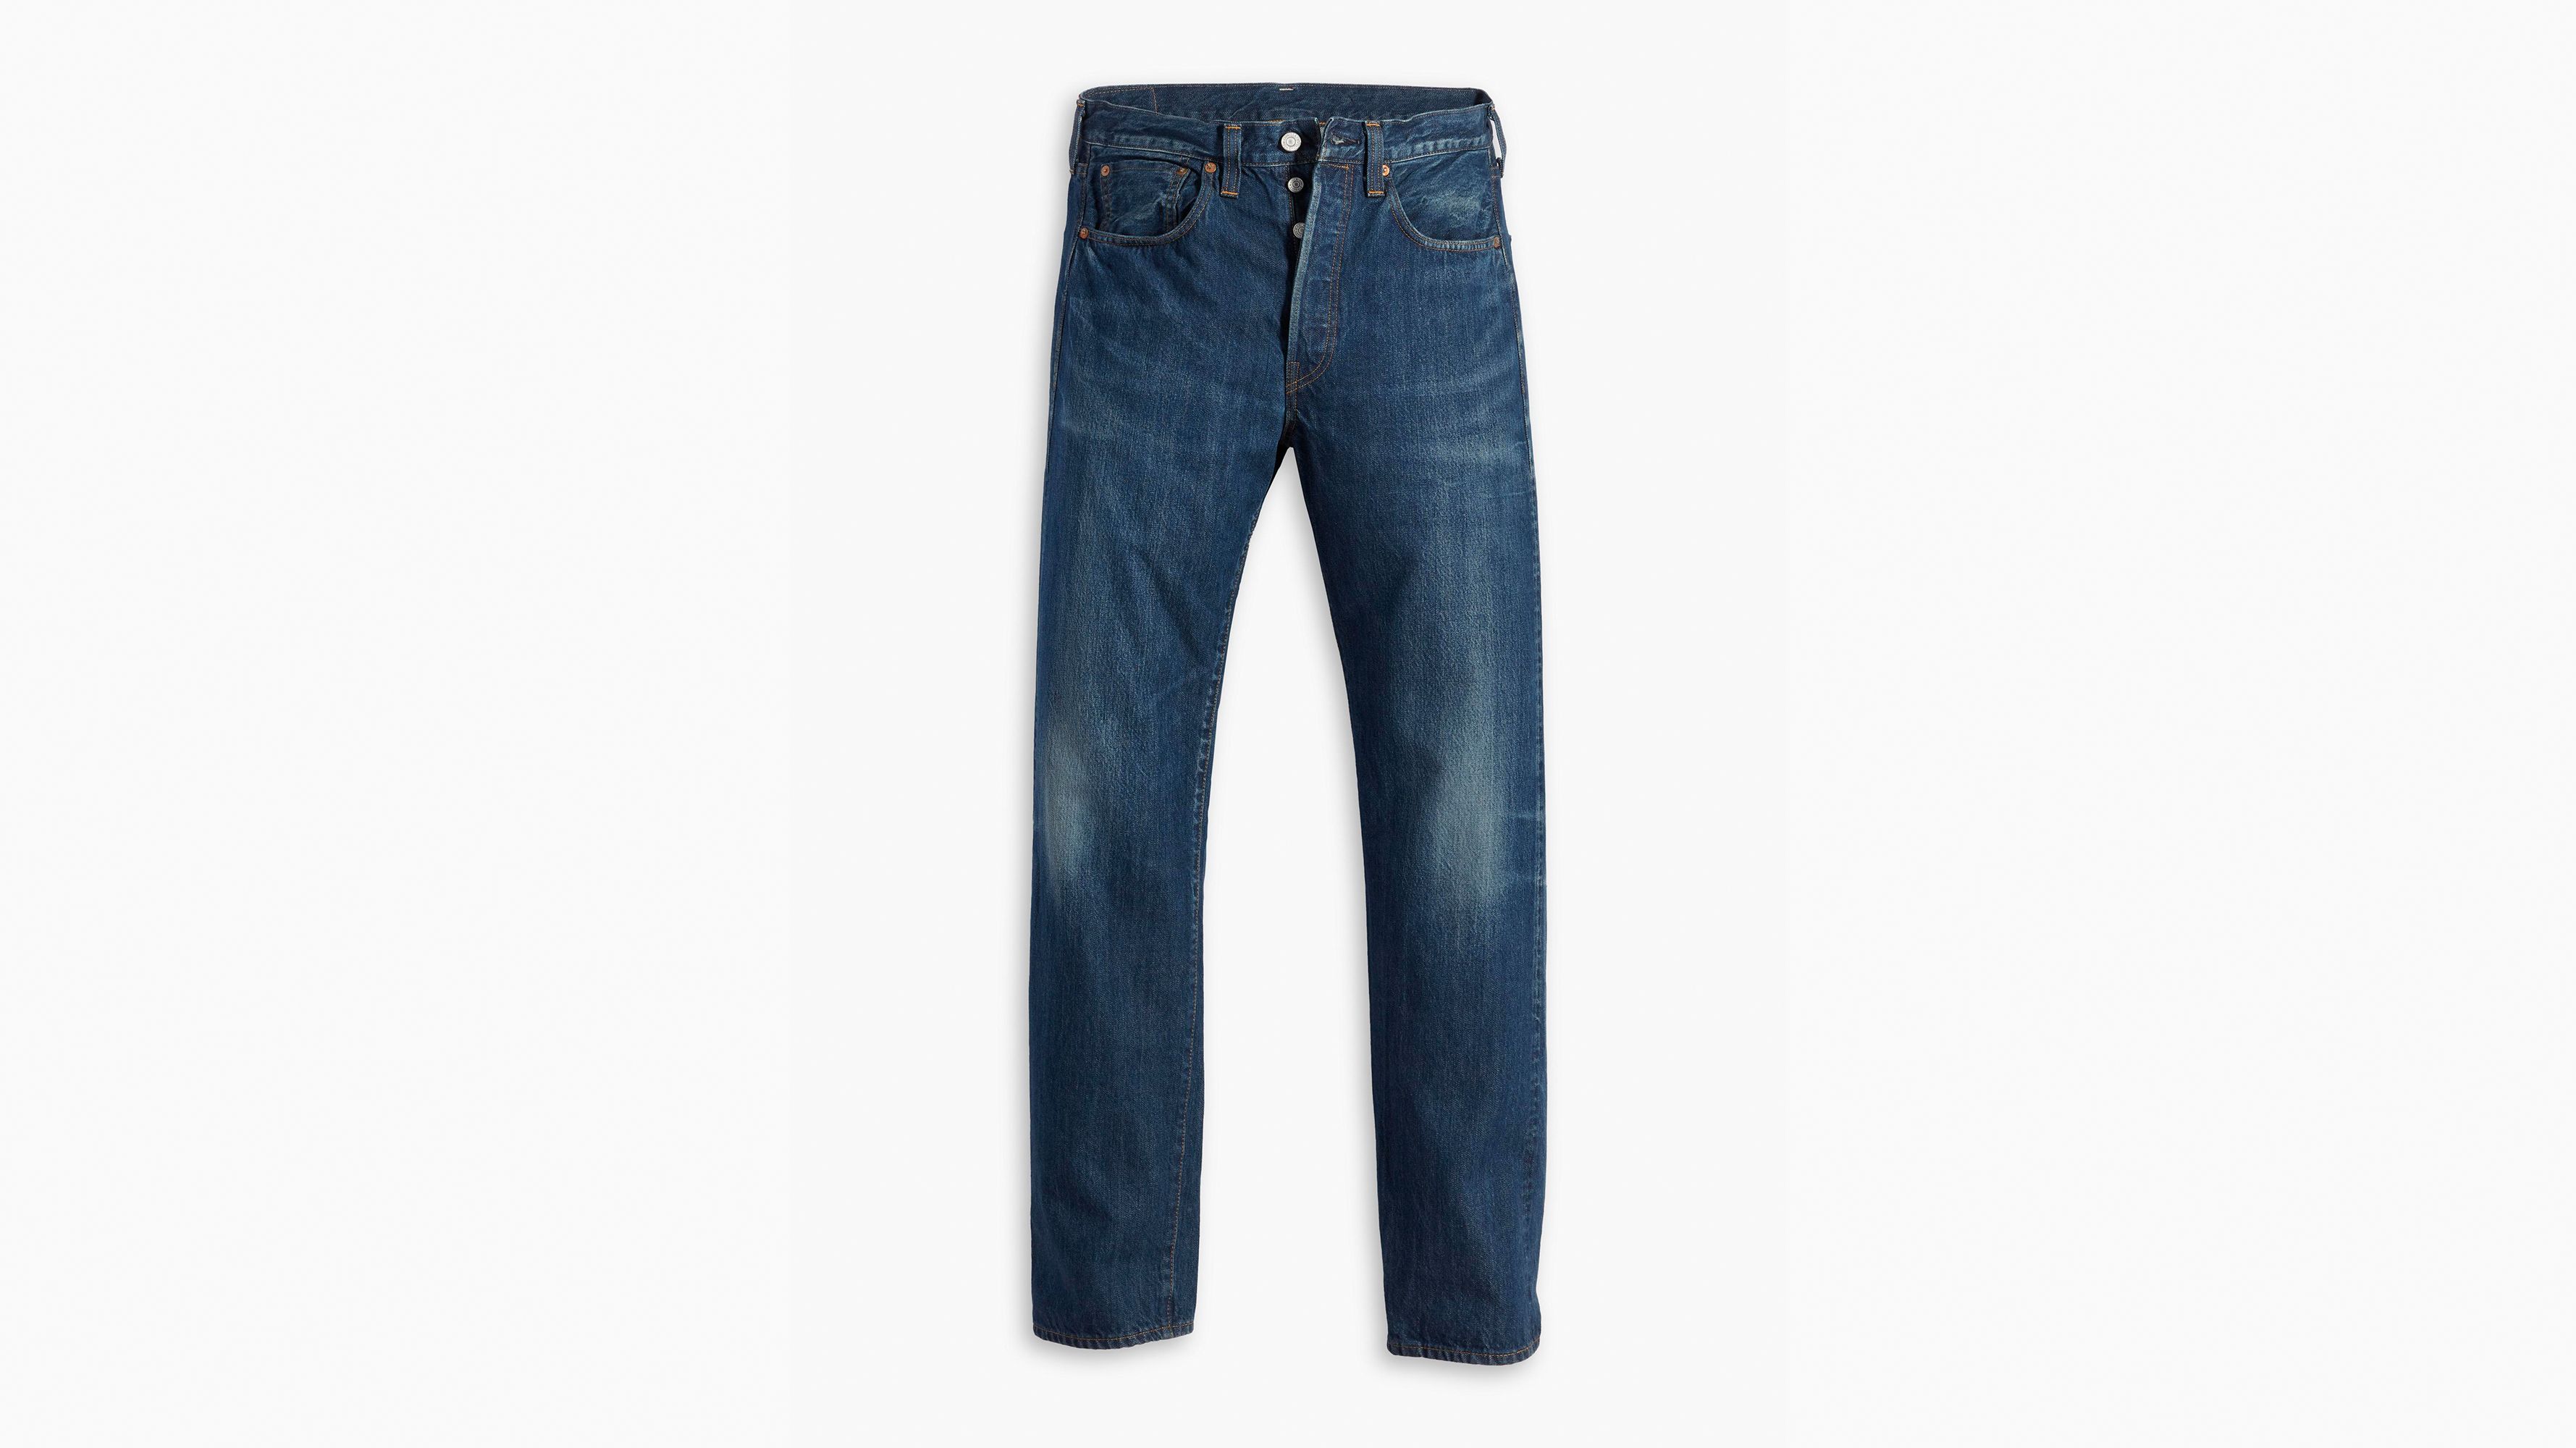 1947 501® Original Fit Selvedge Men's Jeans